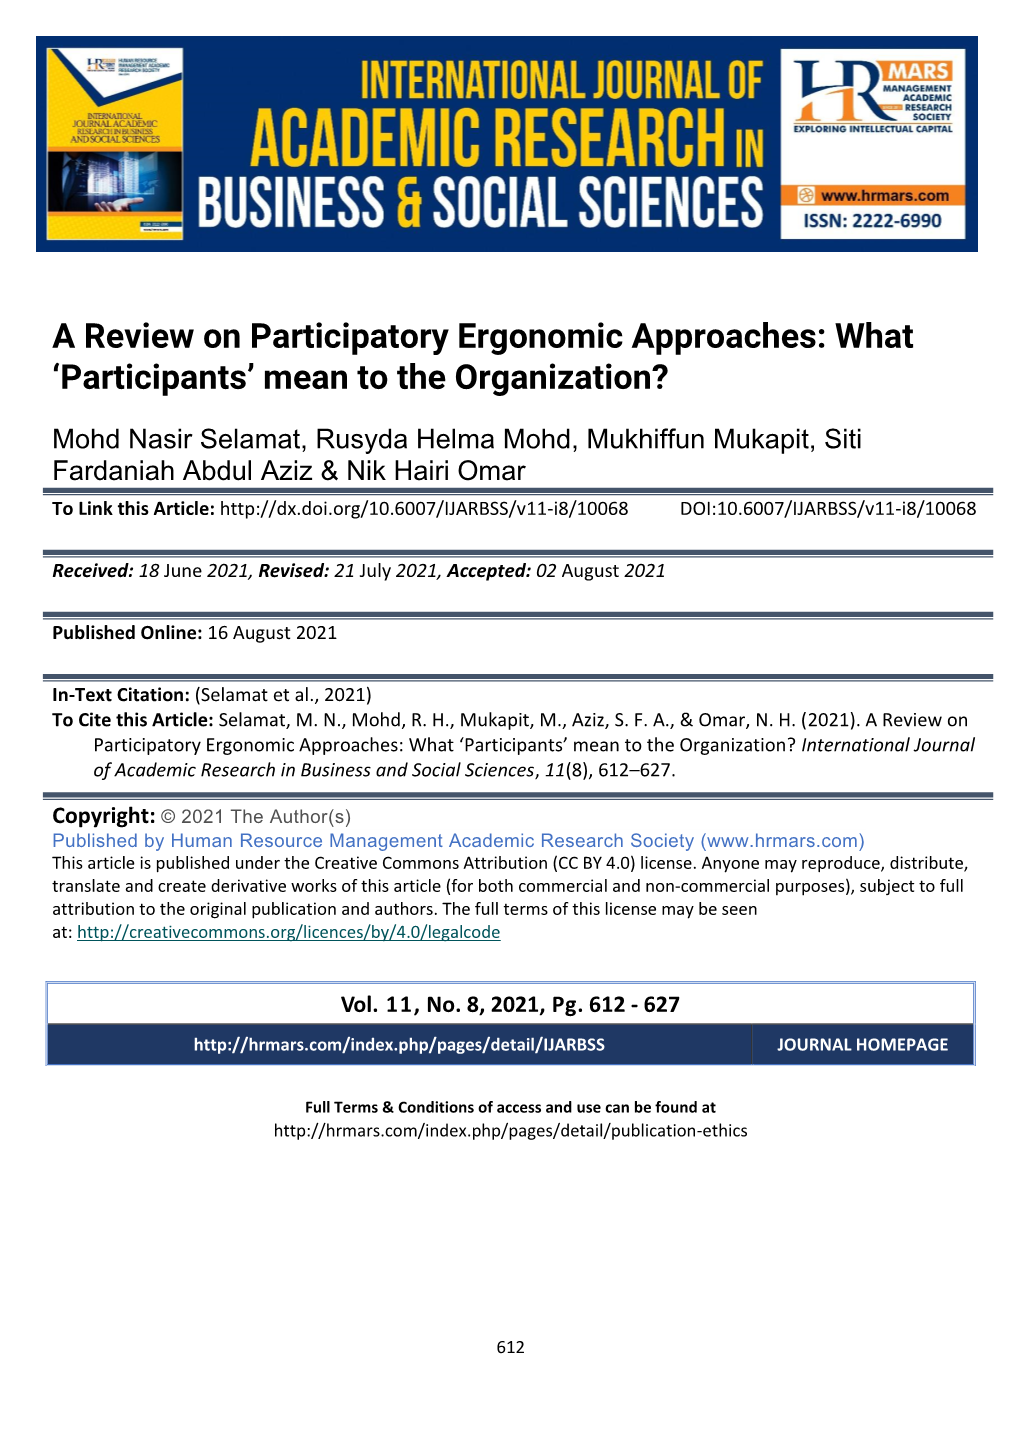 A Review on Participatory Ergonomic Approaches: What 'Participants'